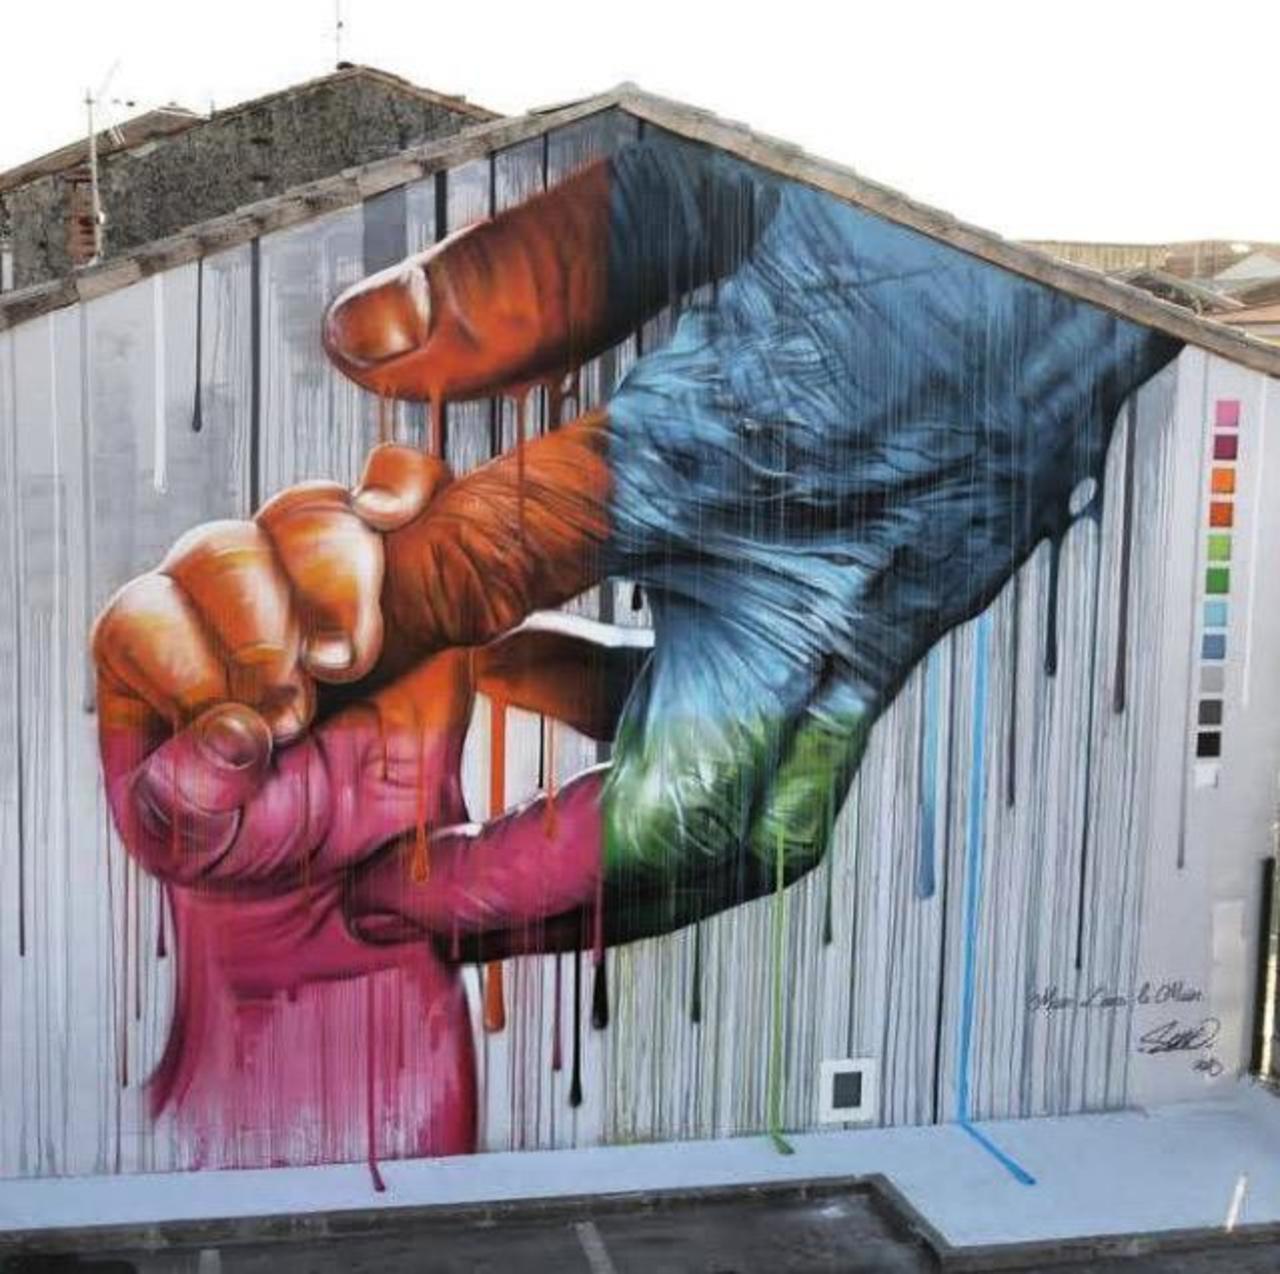 RT @BenWest: RT @JanPoPcHi: Seno Street Art 

#art #graffiti #mural #streetart http://t.co/eh8KNEpjEr